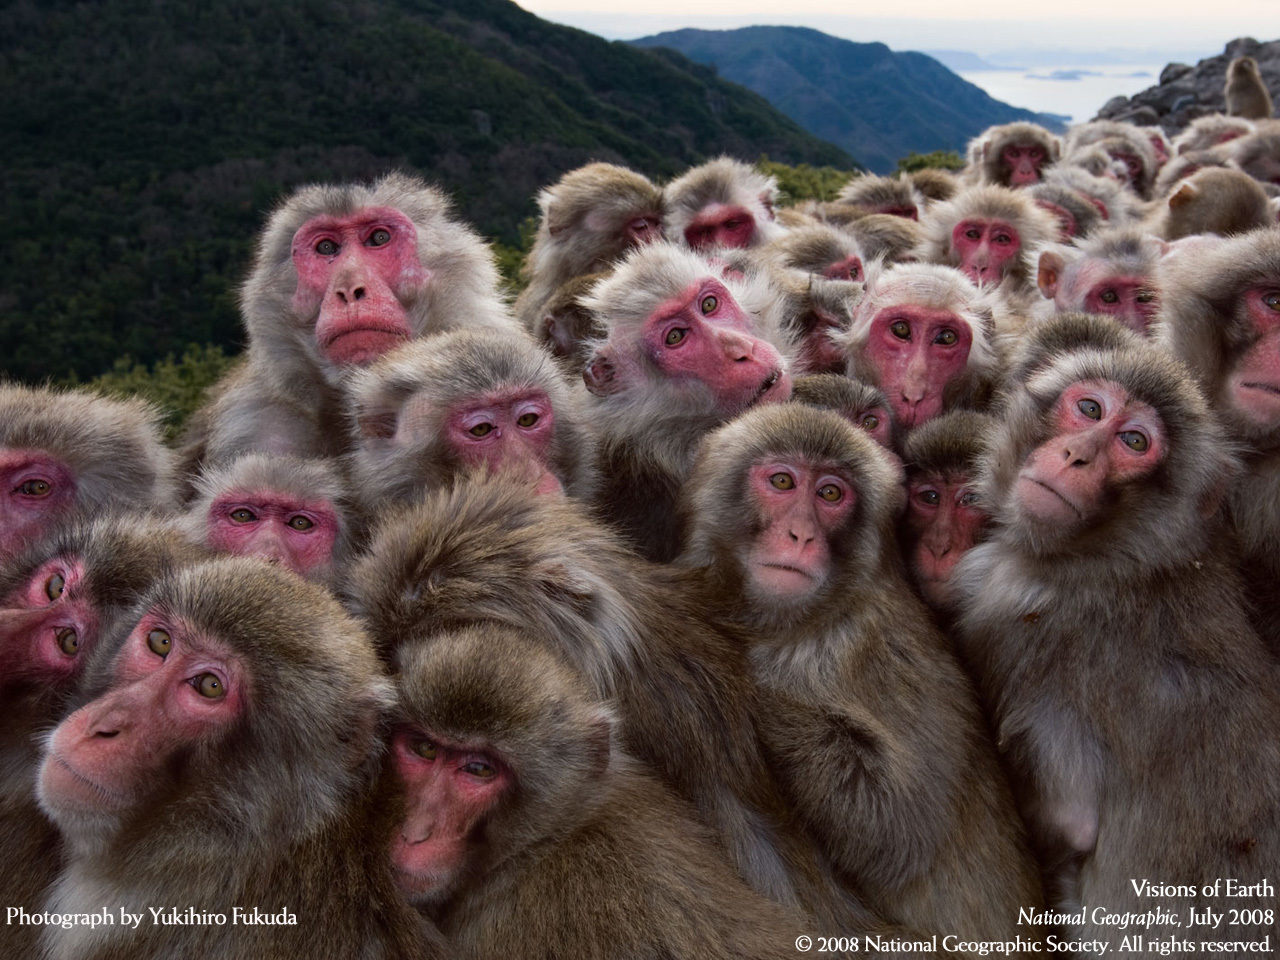 animals_national_geographic_monkeys_primates_desktop_1280x960_wallpaper-34228.jpg